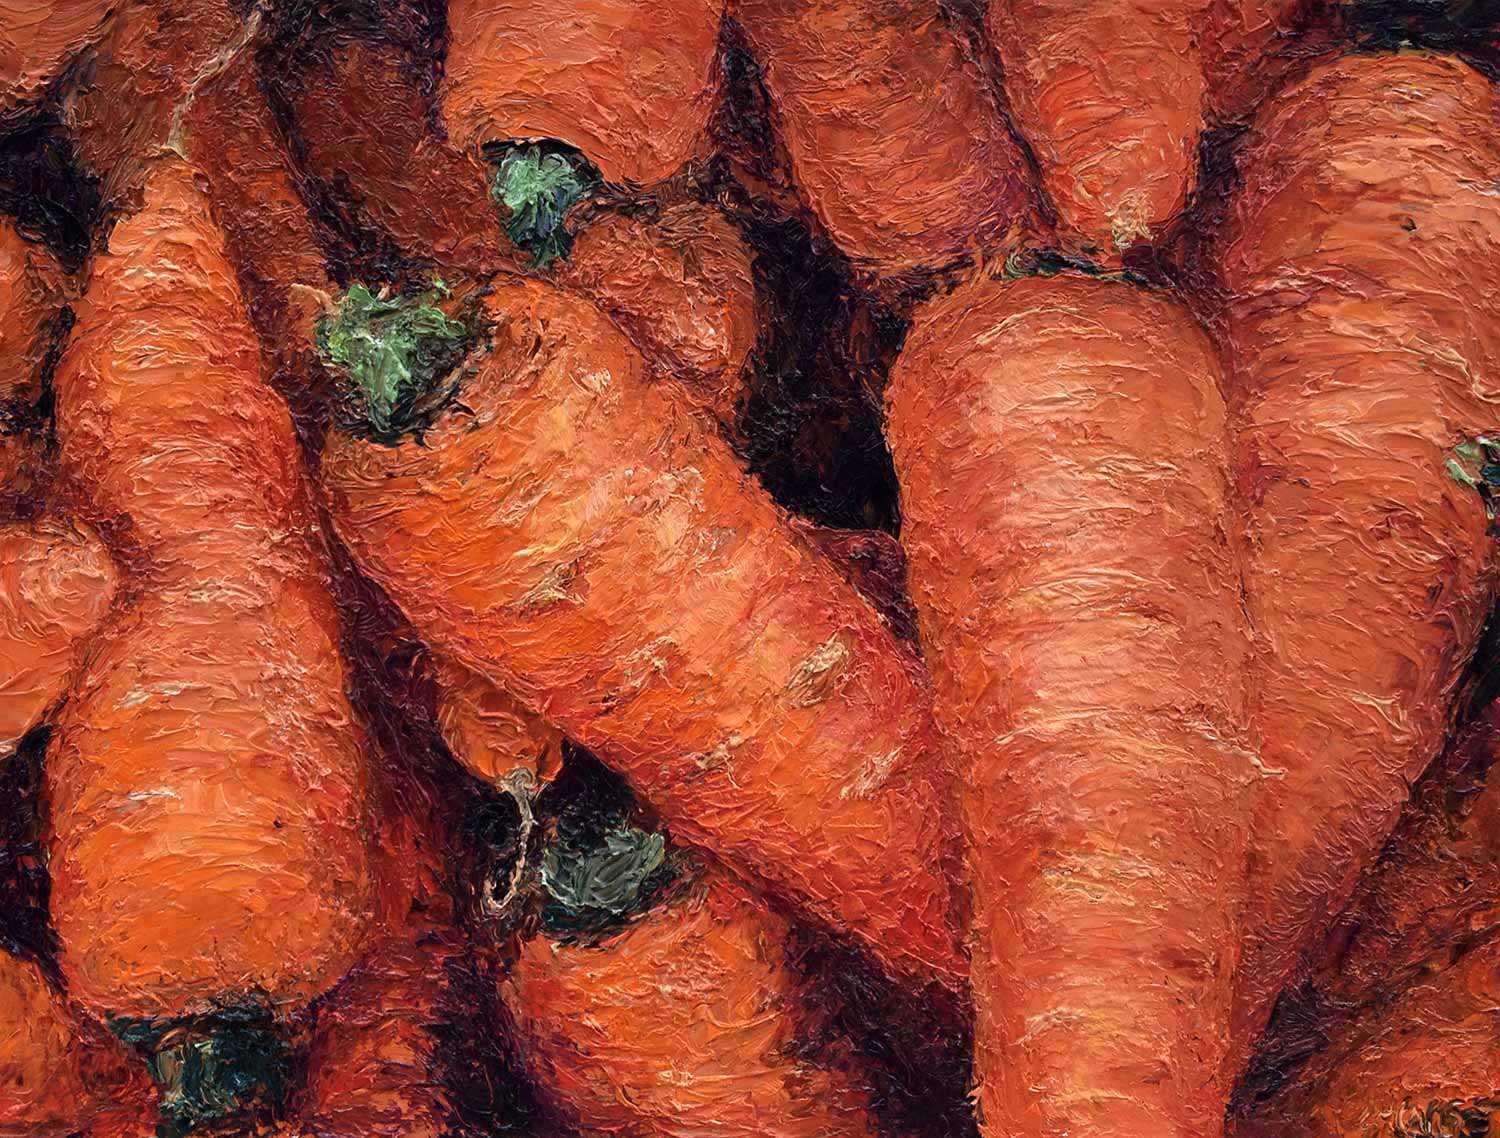 ”Carrots” by Grayden Laing, oil on panel